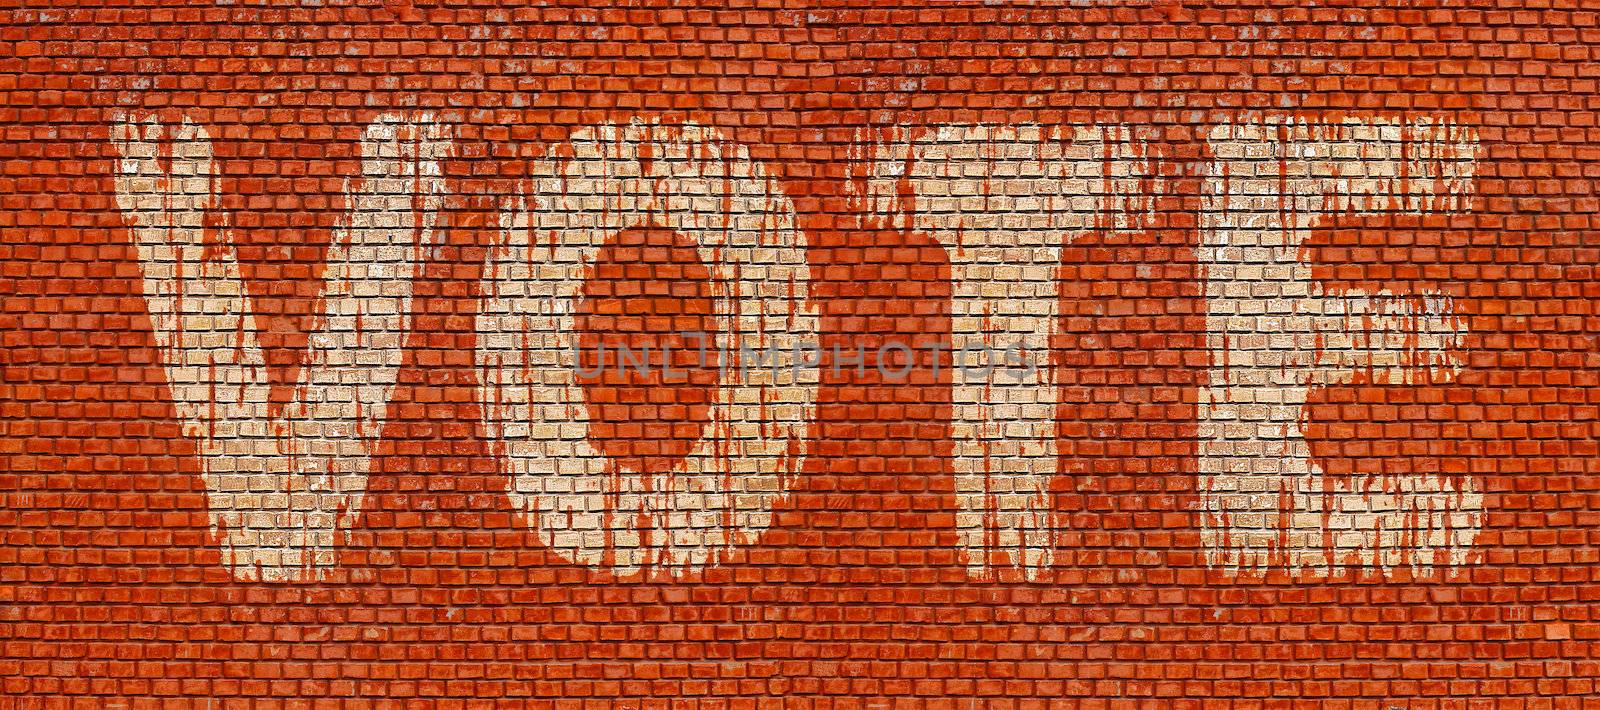 Word Vote on a brick wall by palinchak